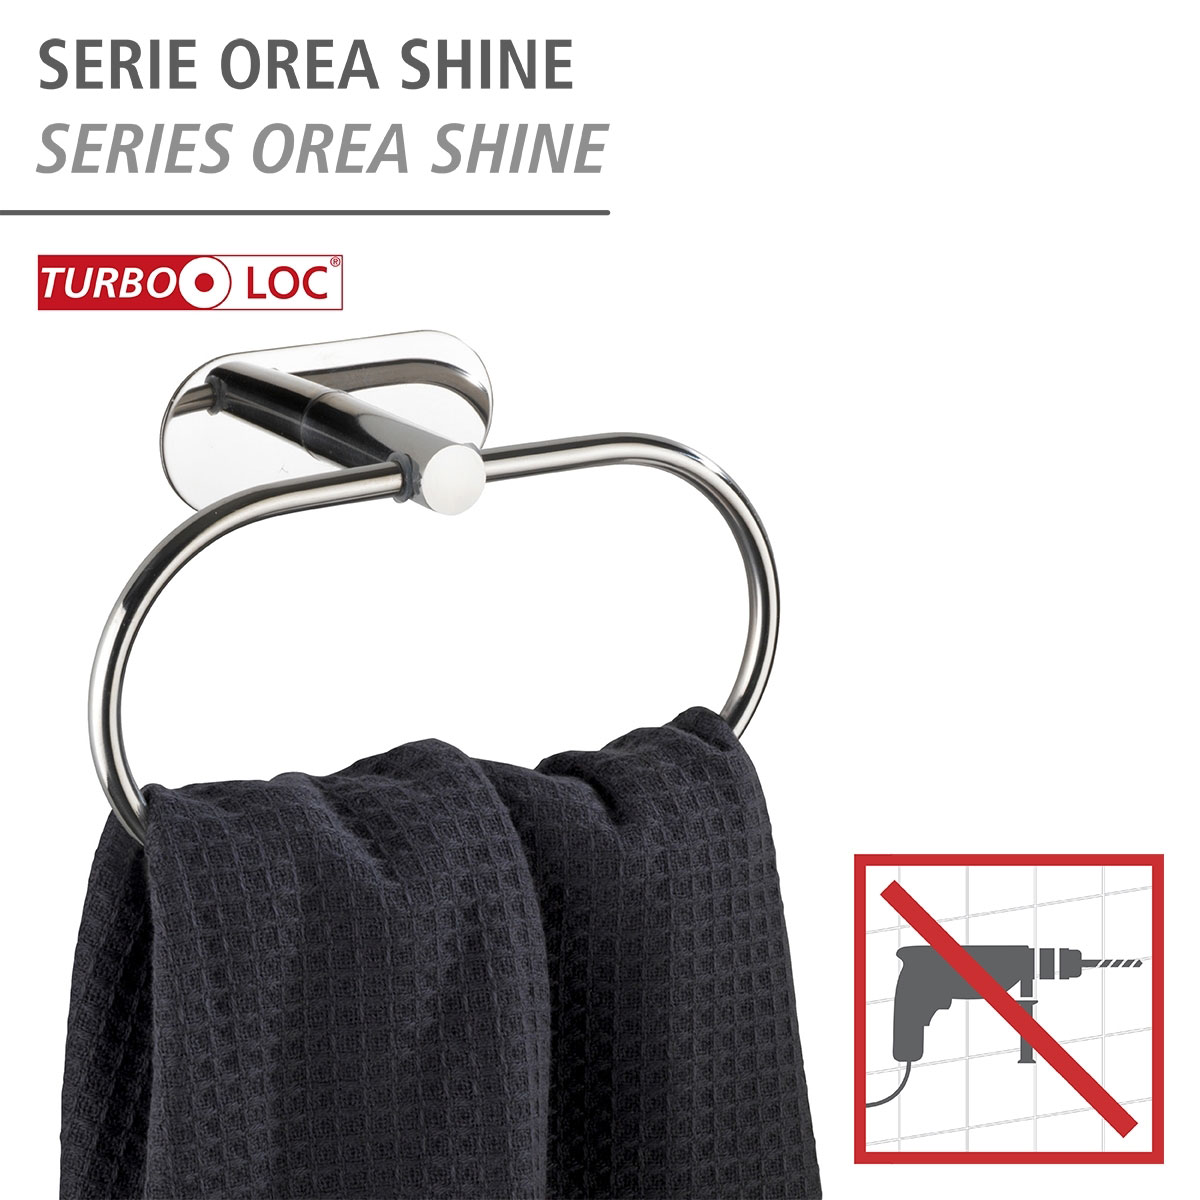 Wenko Turbo-Loc Handtuchring Orea Shine | 503695